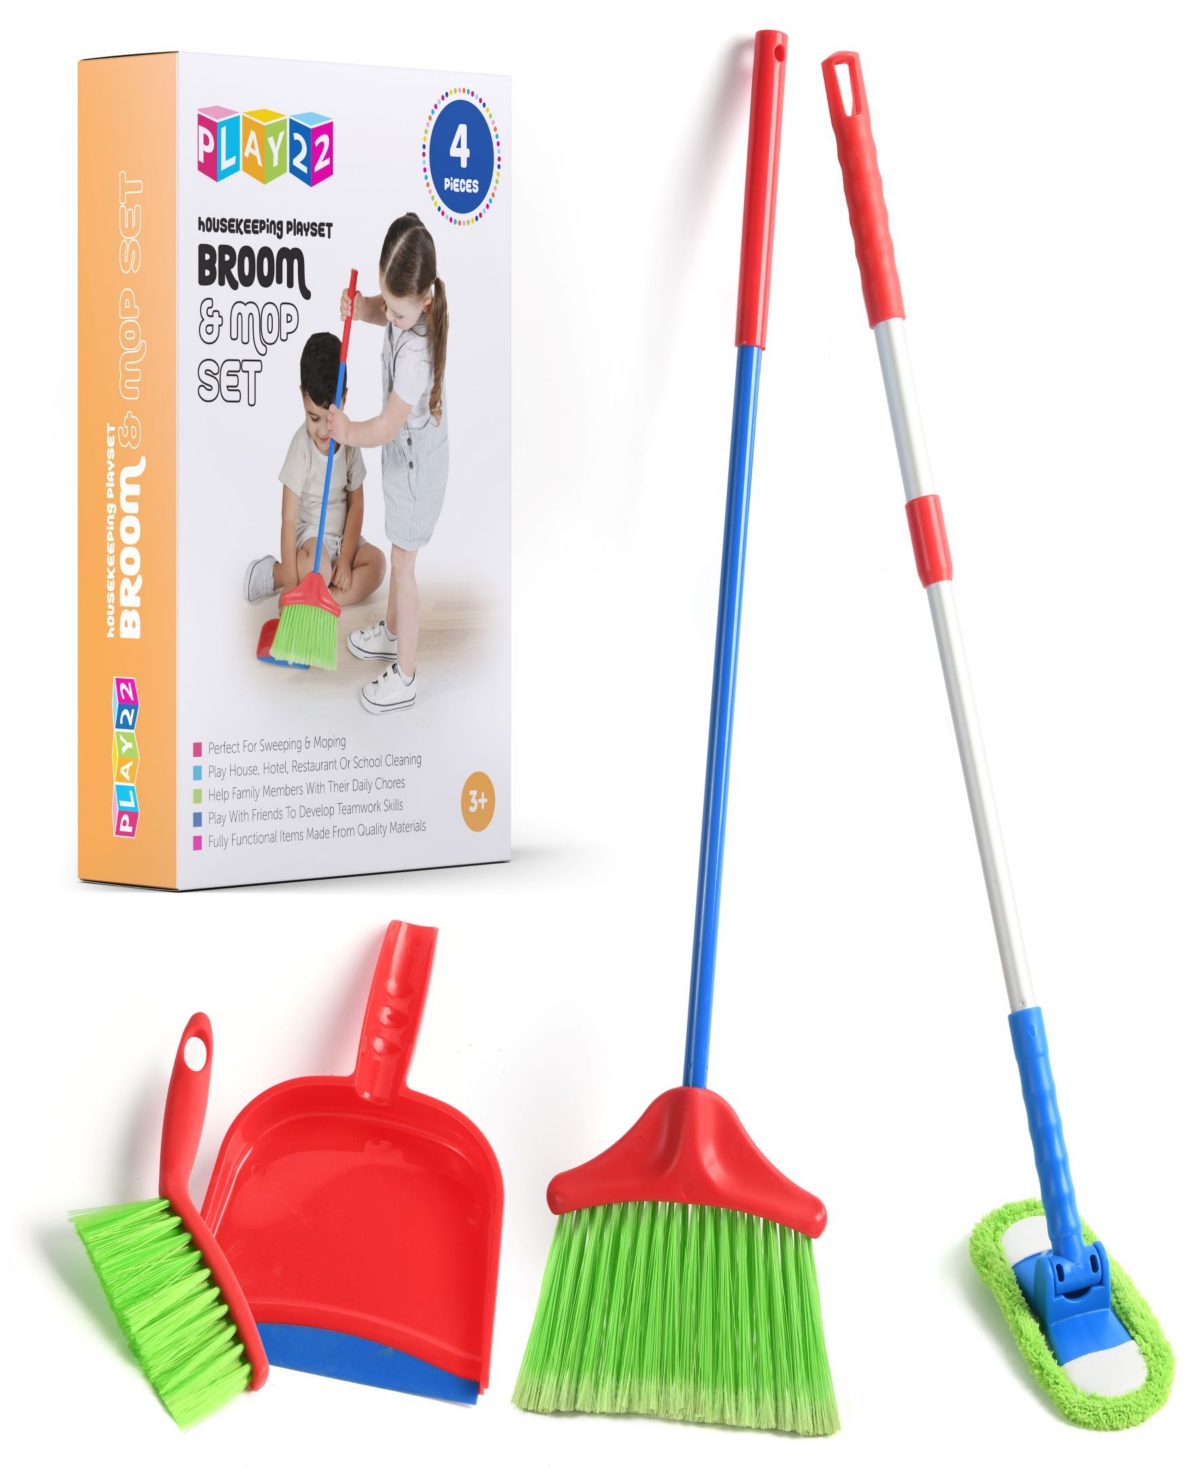 Play22 Babies' Kids Cleaning Set Includes Broom, Mop, Brush Dust Pan In Multicolor